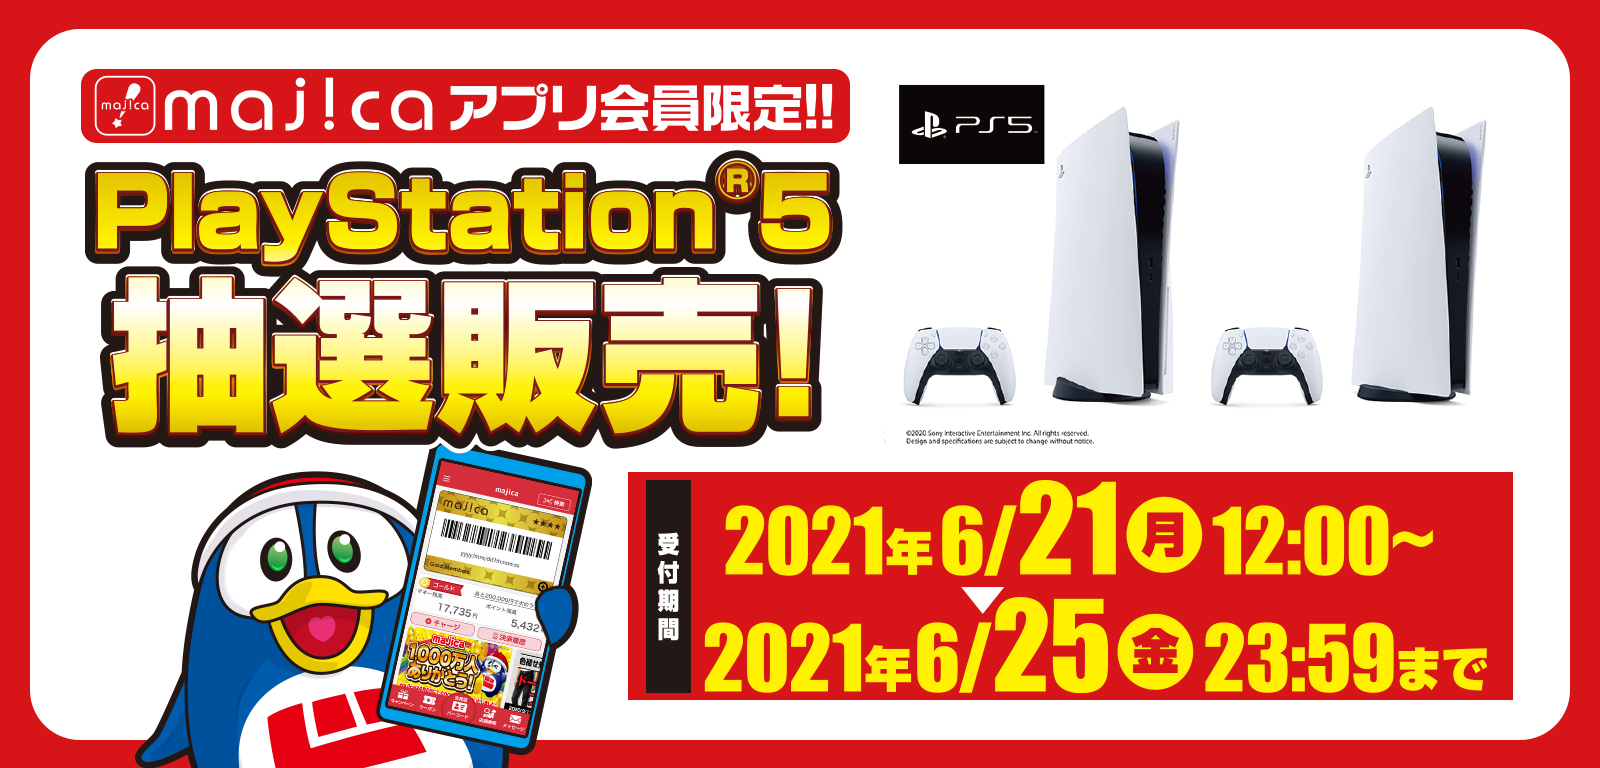 majicaアプリ会員限定！！PlayStation®5抽選販売！ 受付期間：2021年6月21日（月）12:00 ～ 2021年6月25日（金）23:59まで 